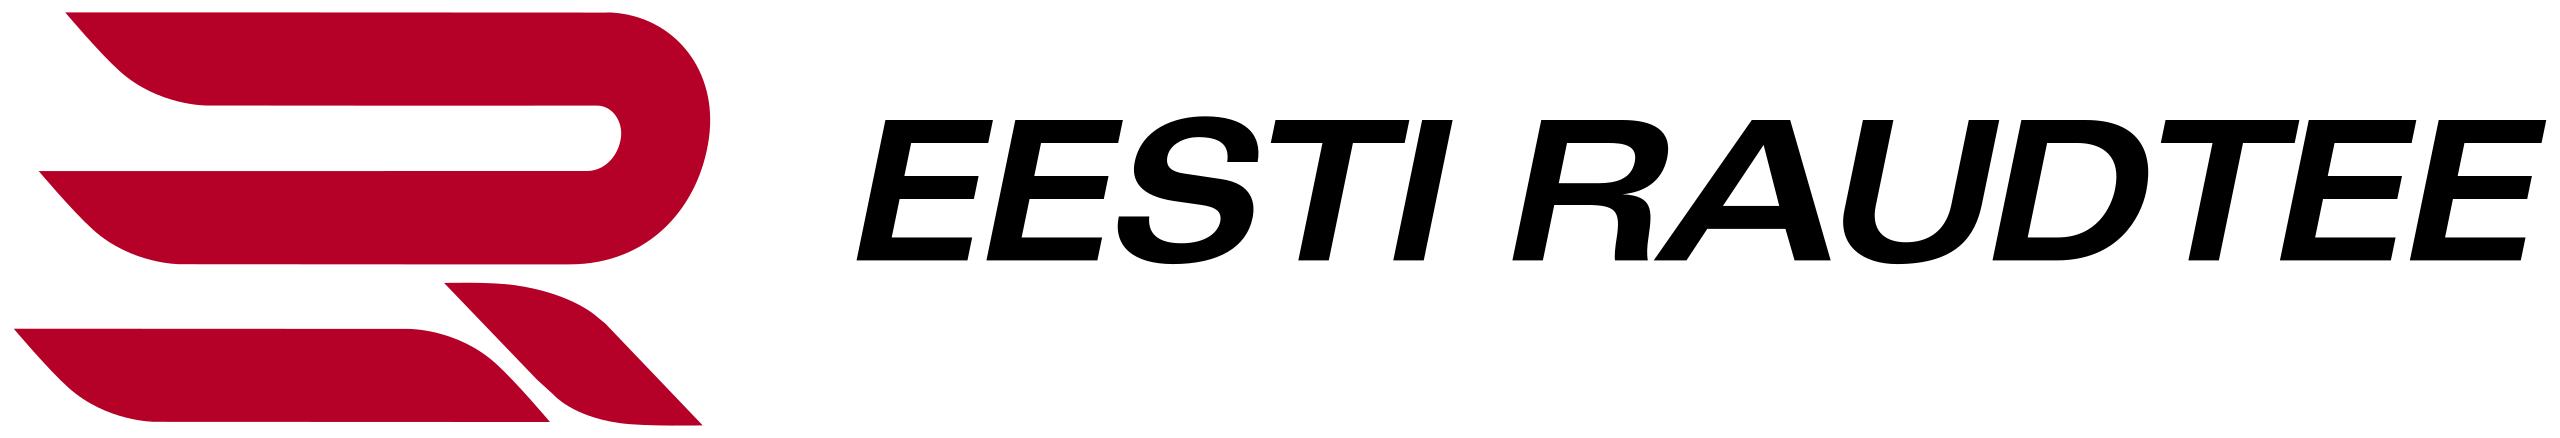 Eesti_Raudtee_logo